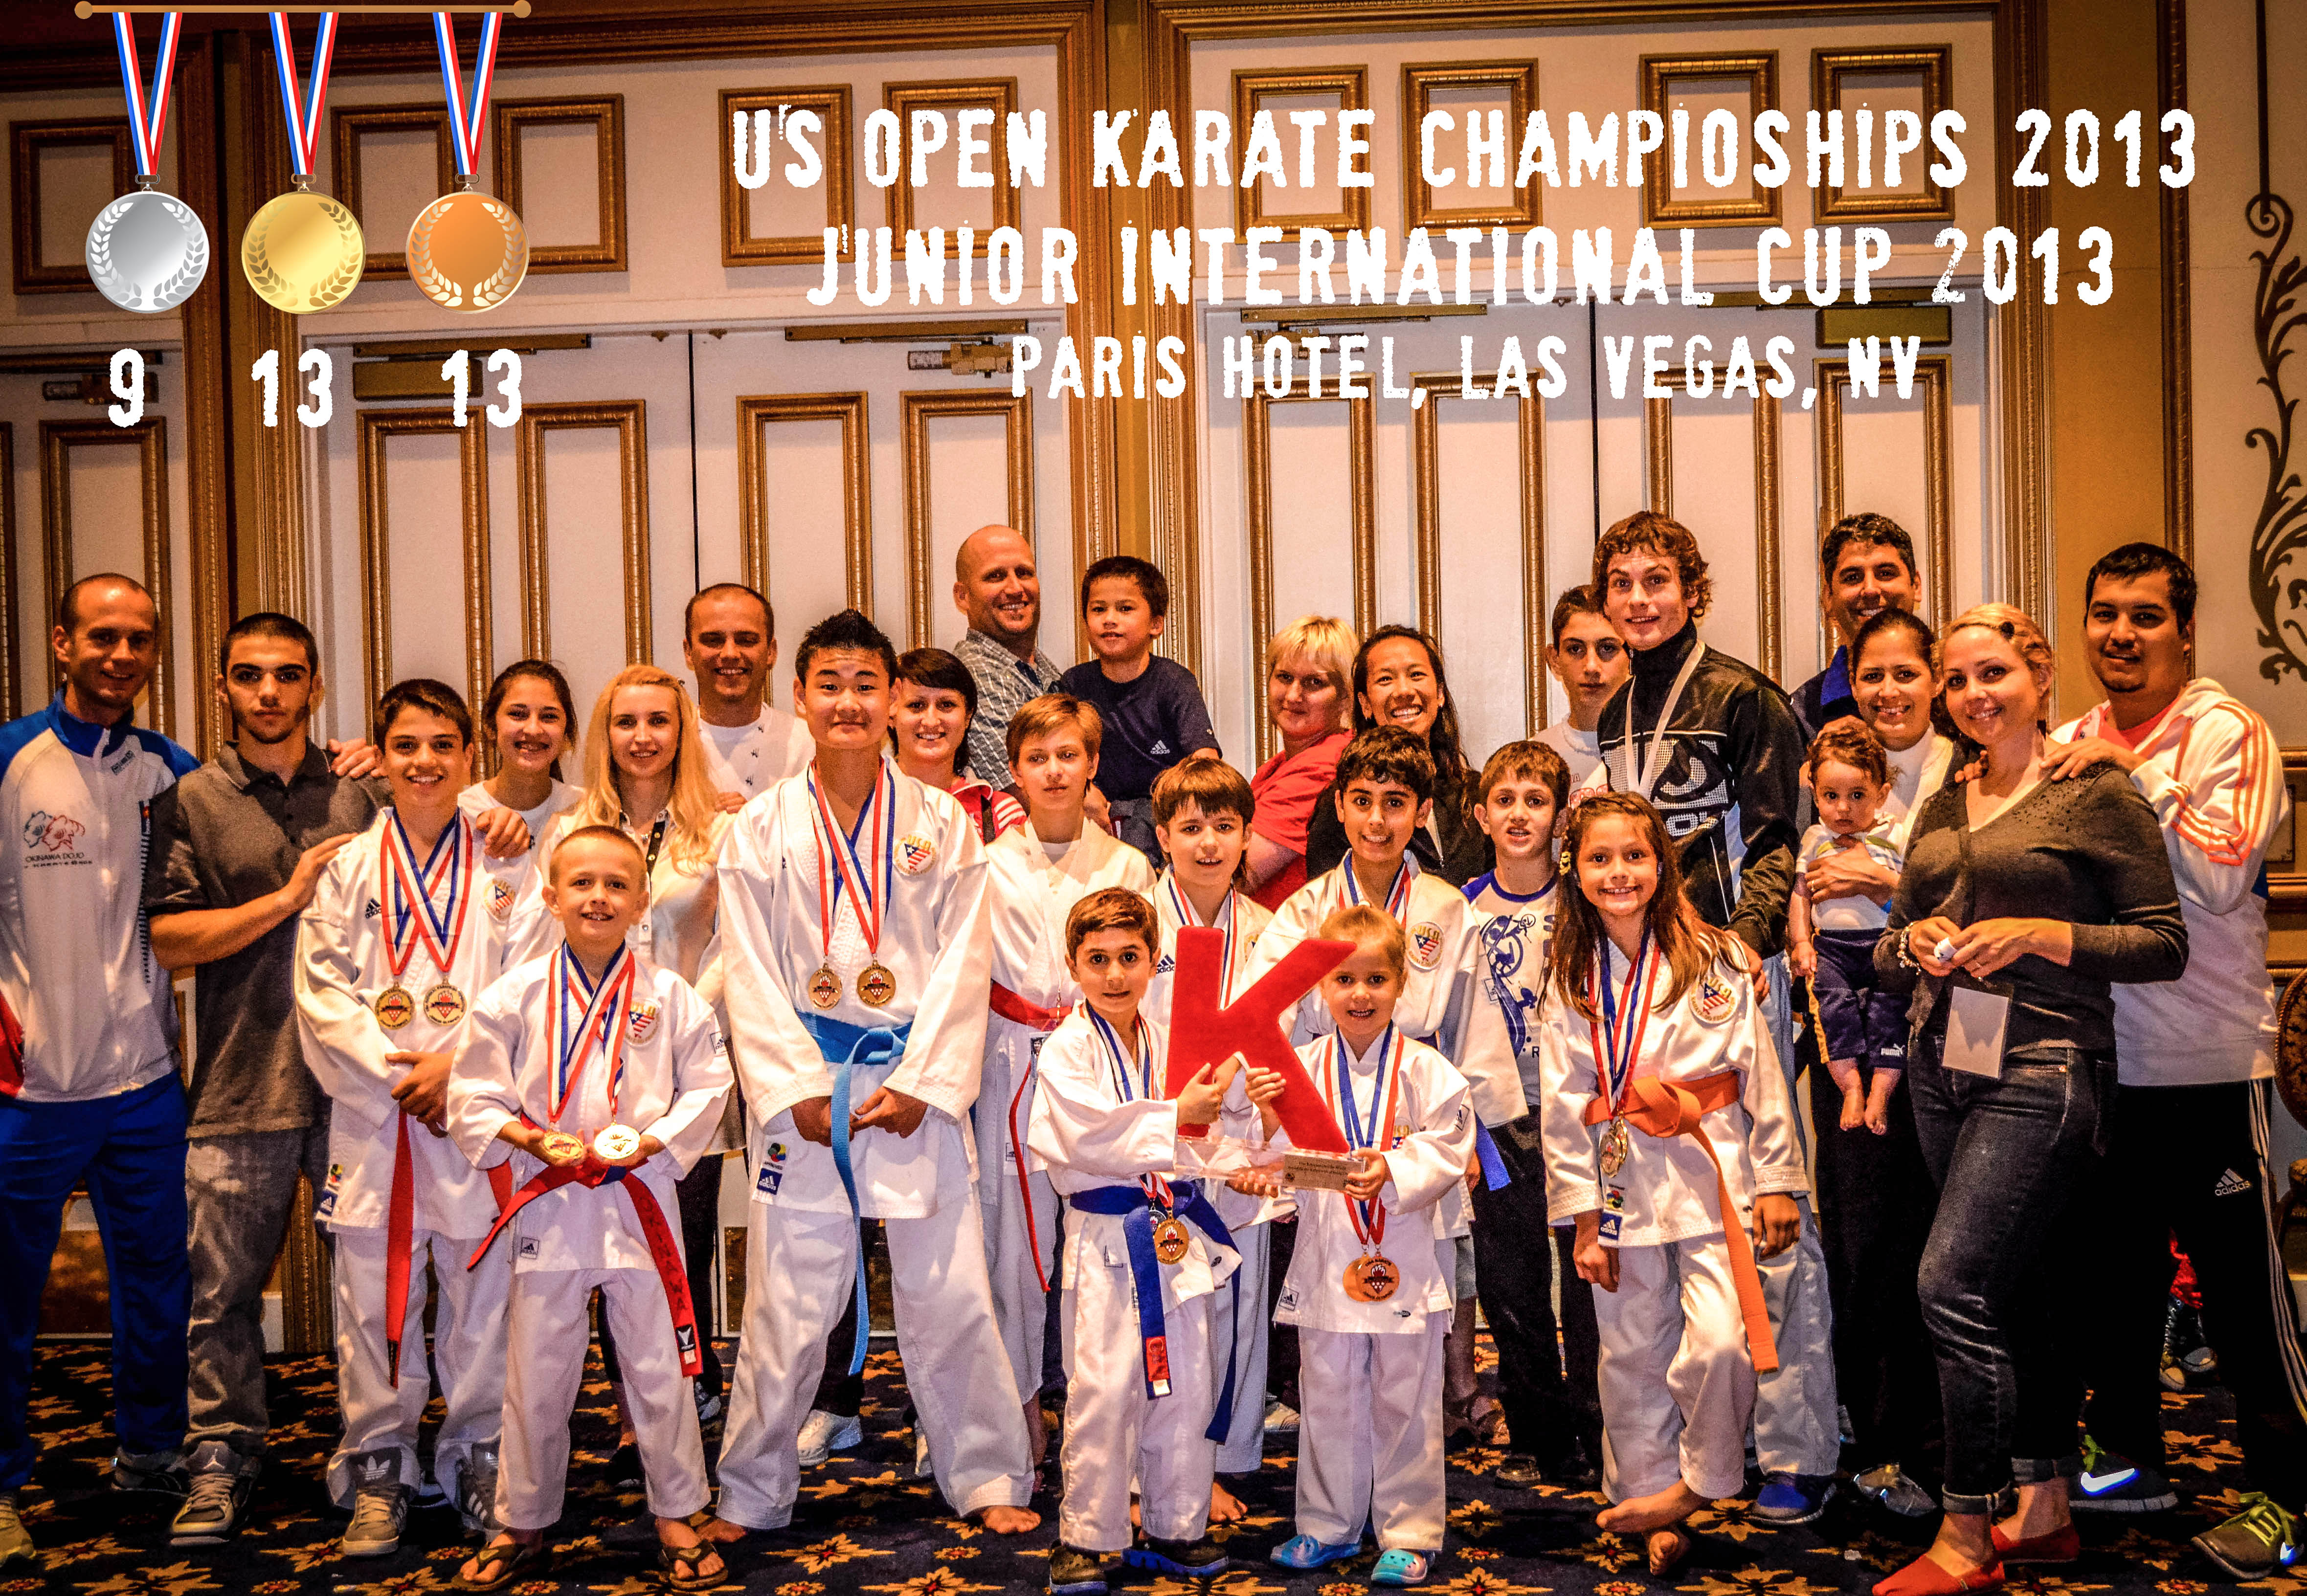 Registration is open. US Open and JR International Karate Championship